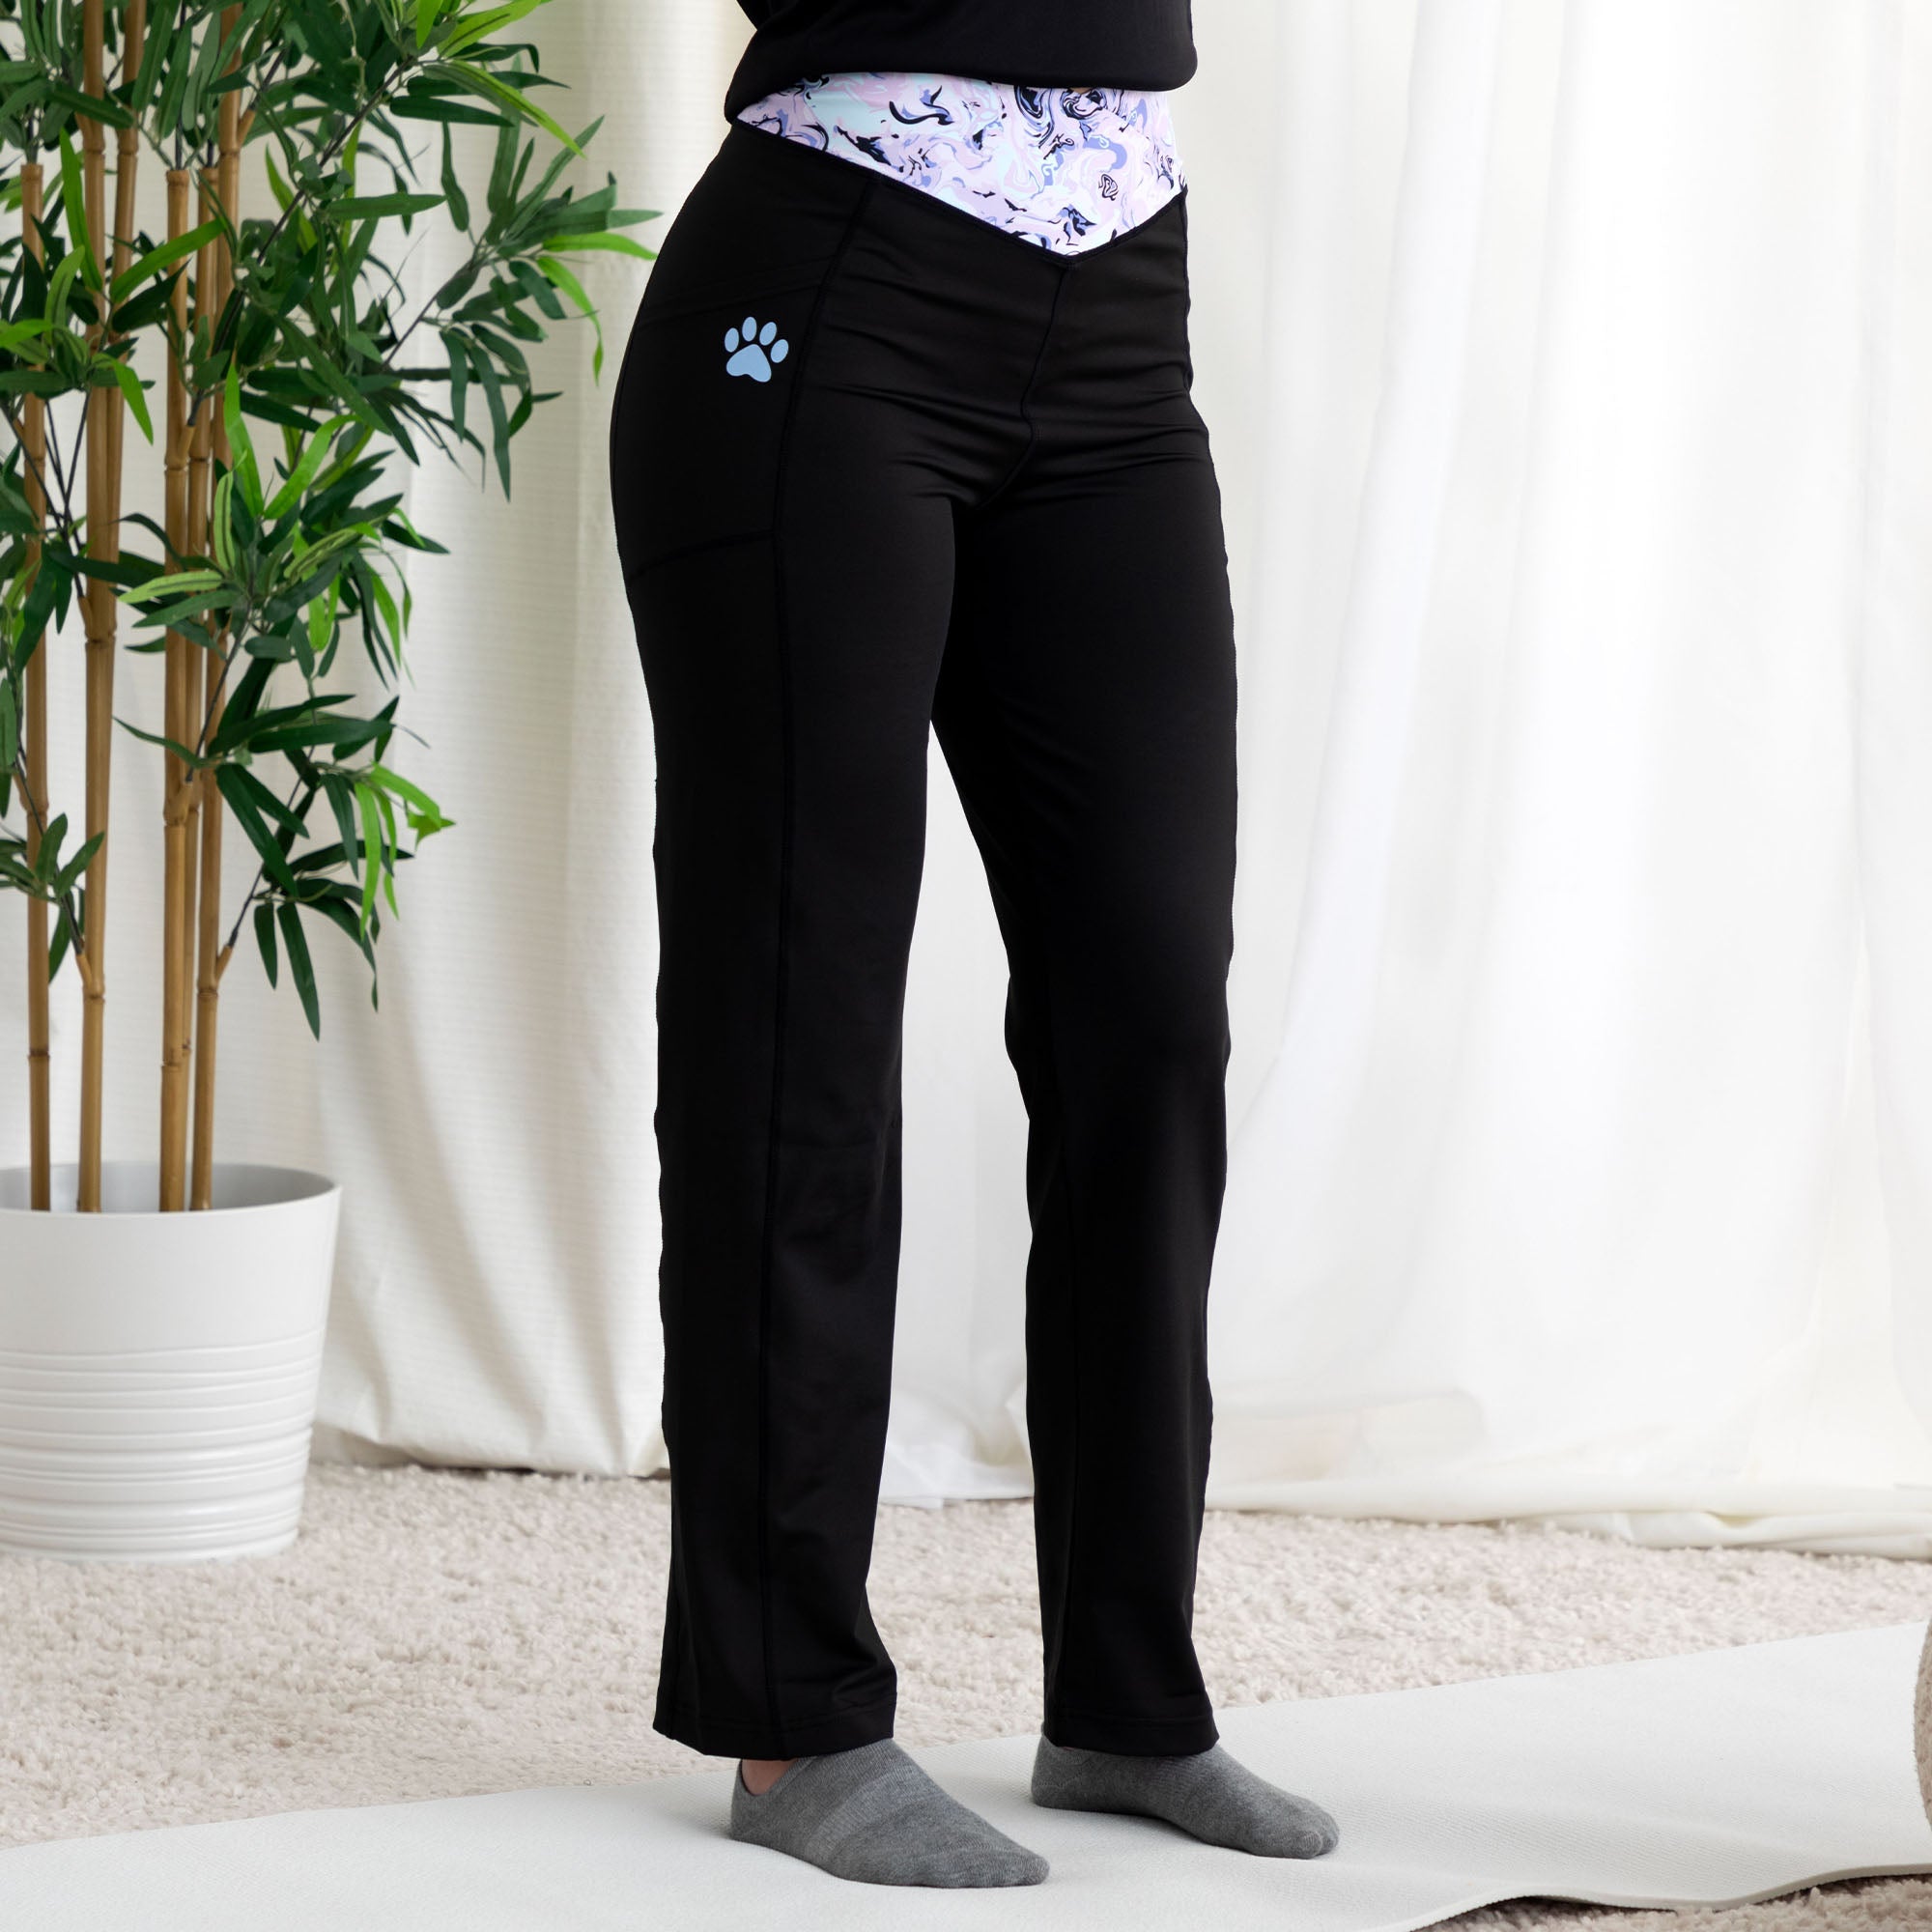 Yoga Paw Print Cross Over Separates - Black - Pants - S